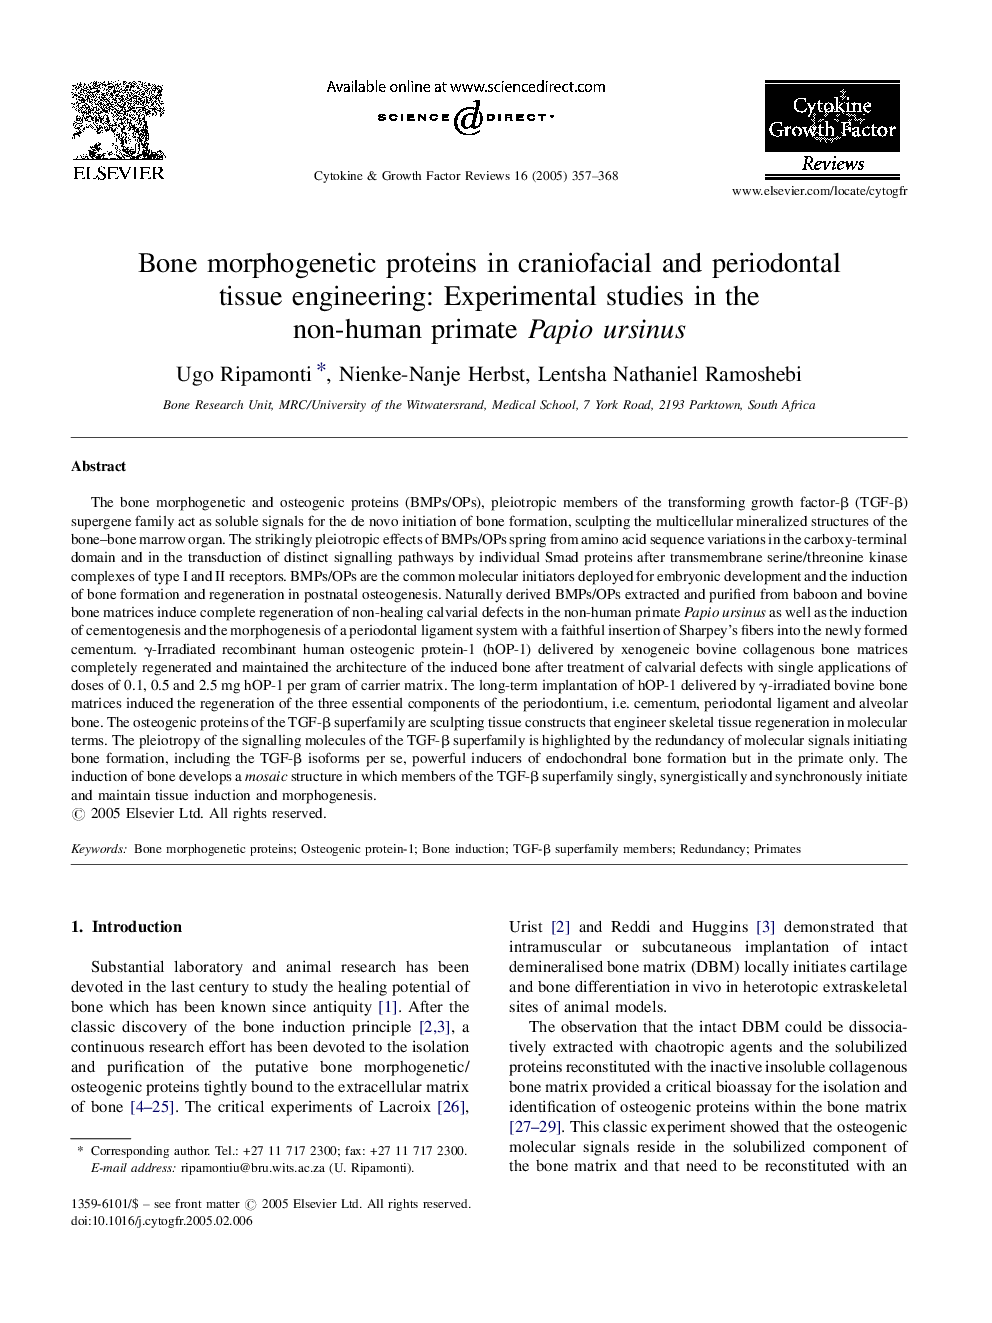 Bone morphogenetic proteins in craniofacial and periodontal tissue engineering: Experimental studies in the non-human primate Papio ursinus